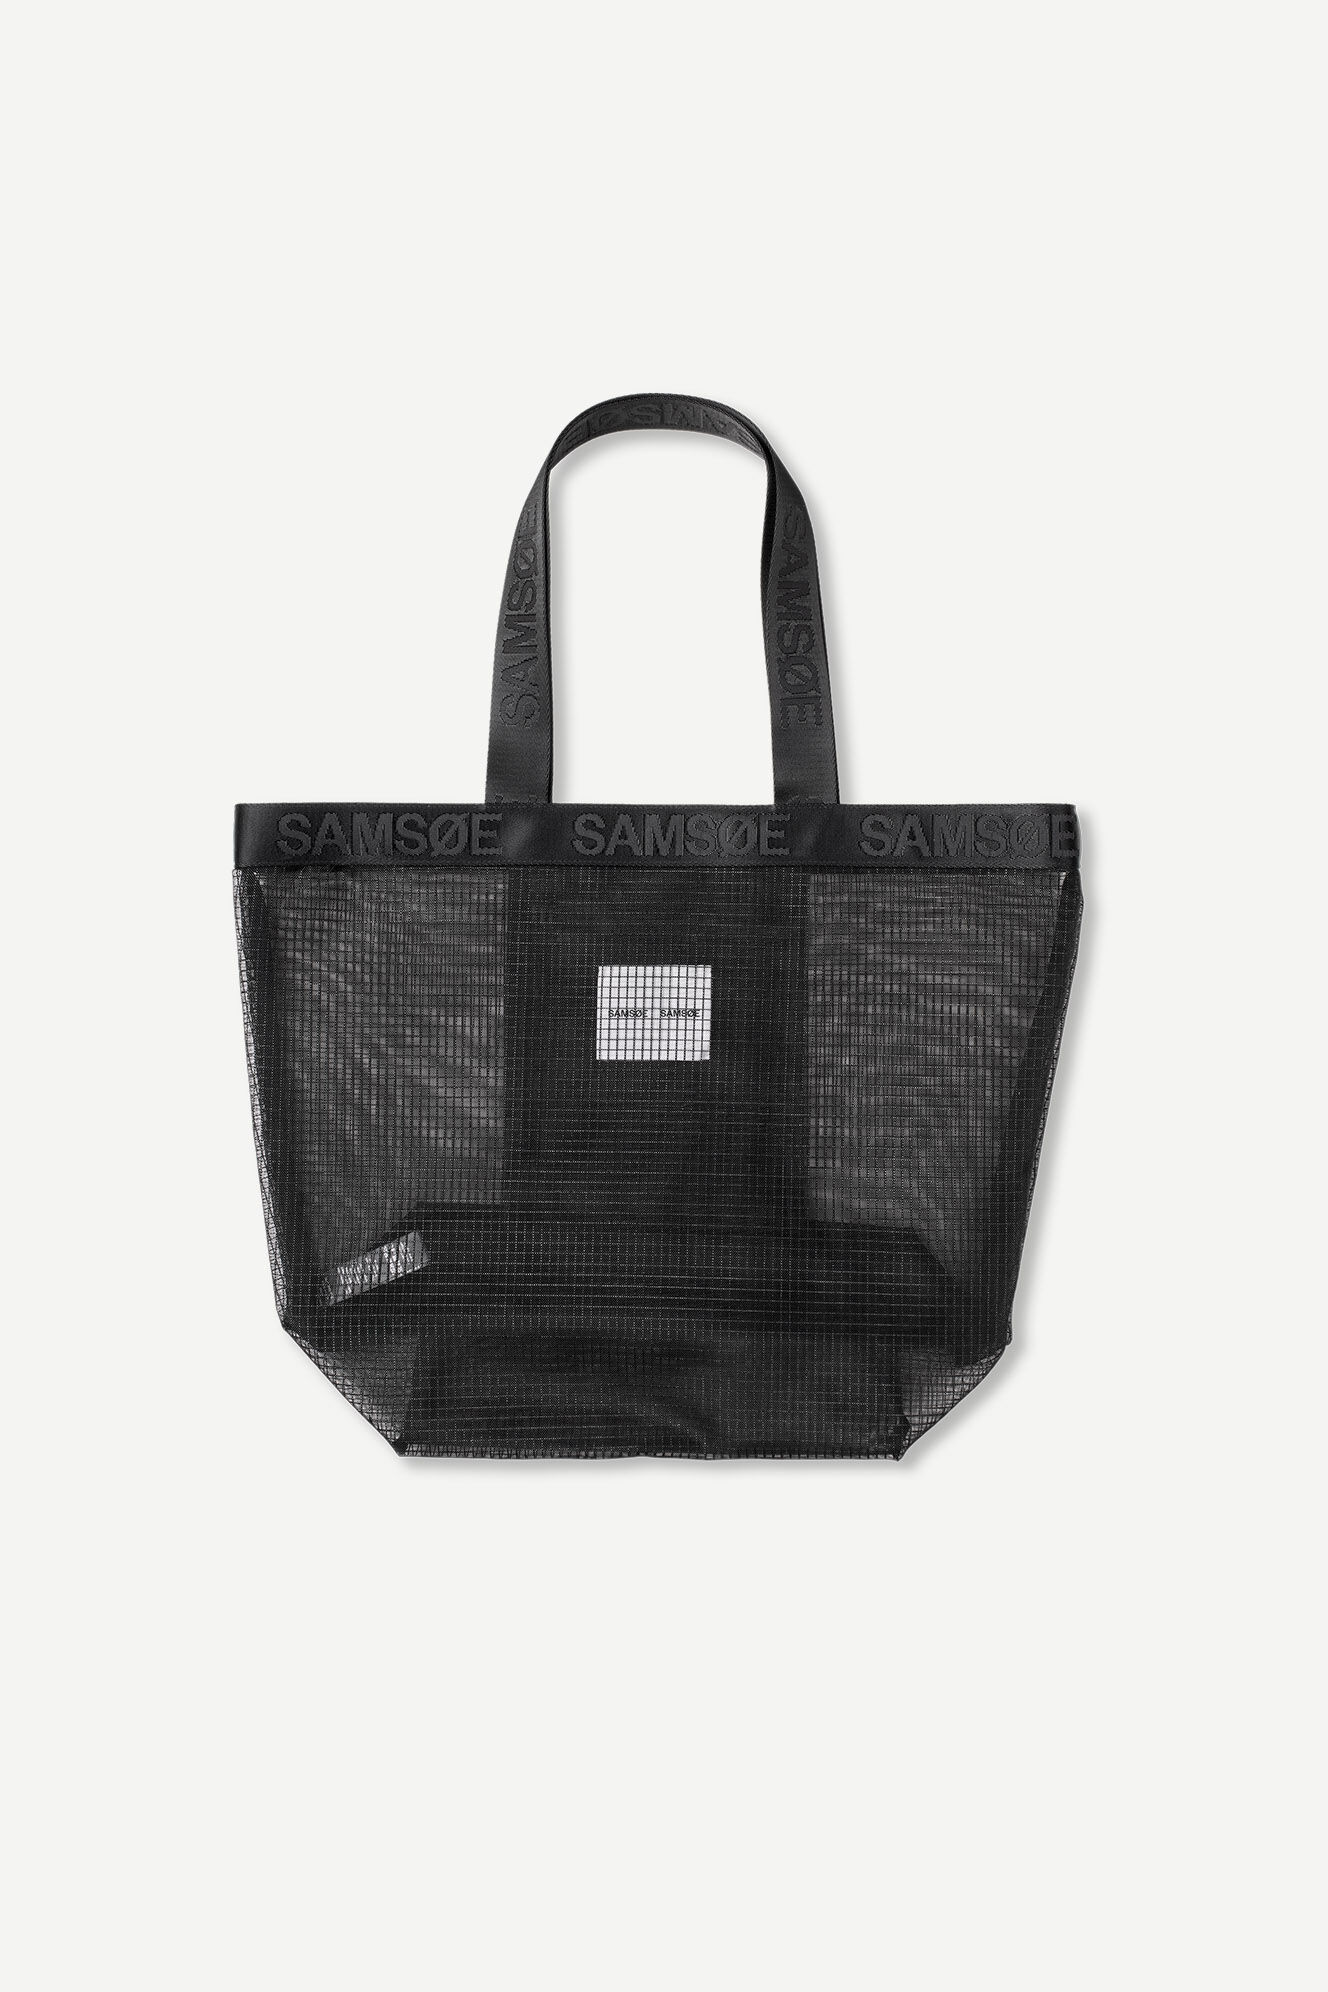 SamsoeSamsoe Black Mila Shopper 14869 Tote Bag